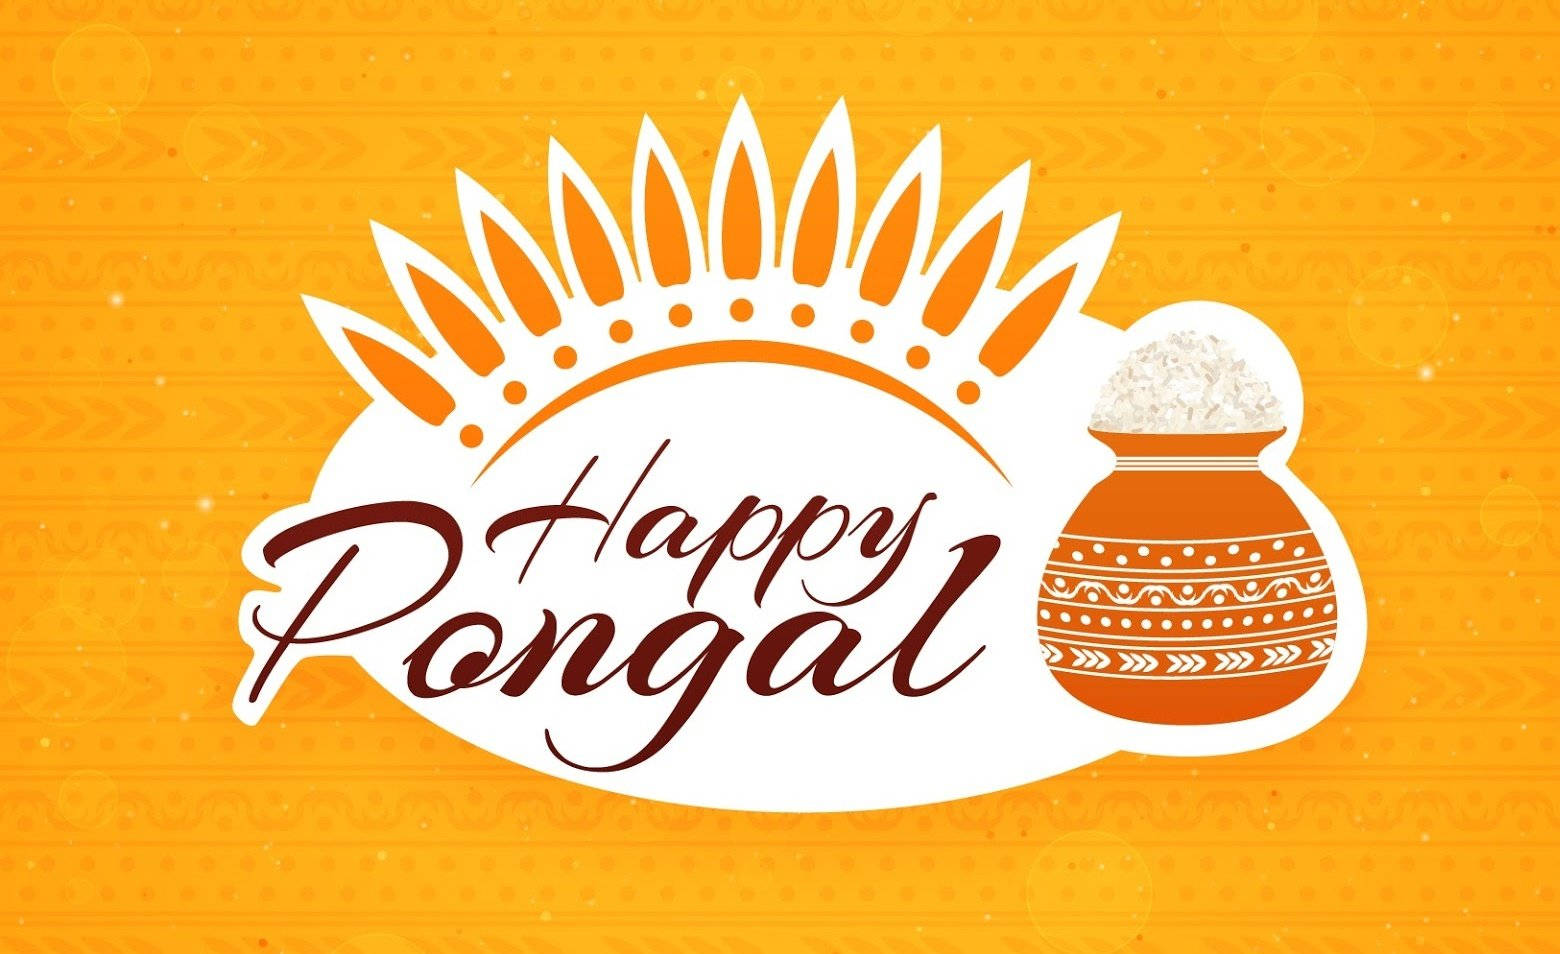 Happy Pongal Orange Greeting Card Background